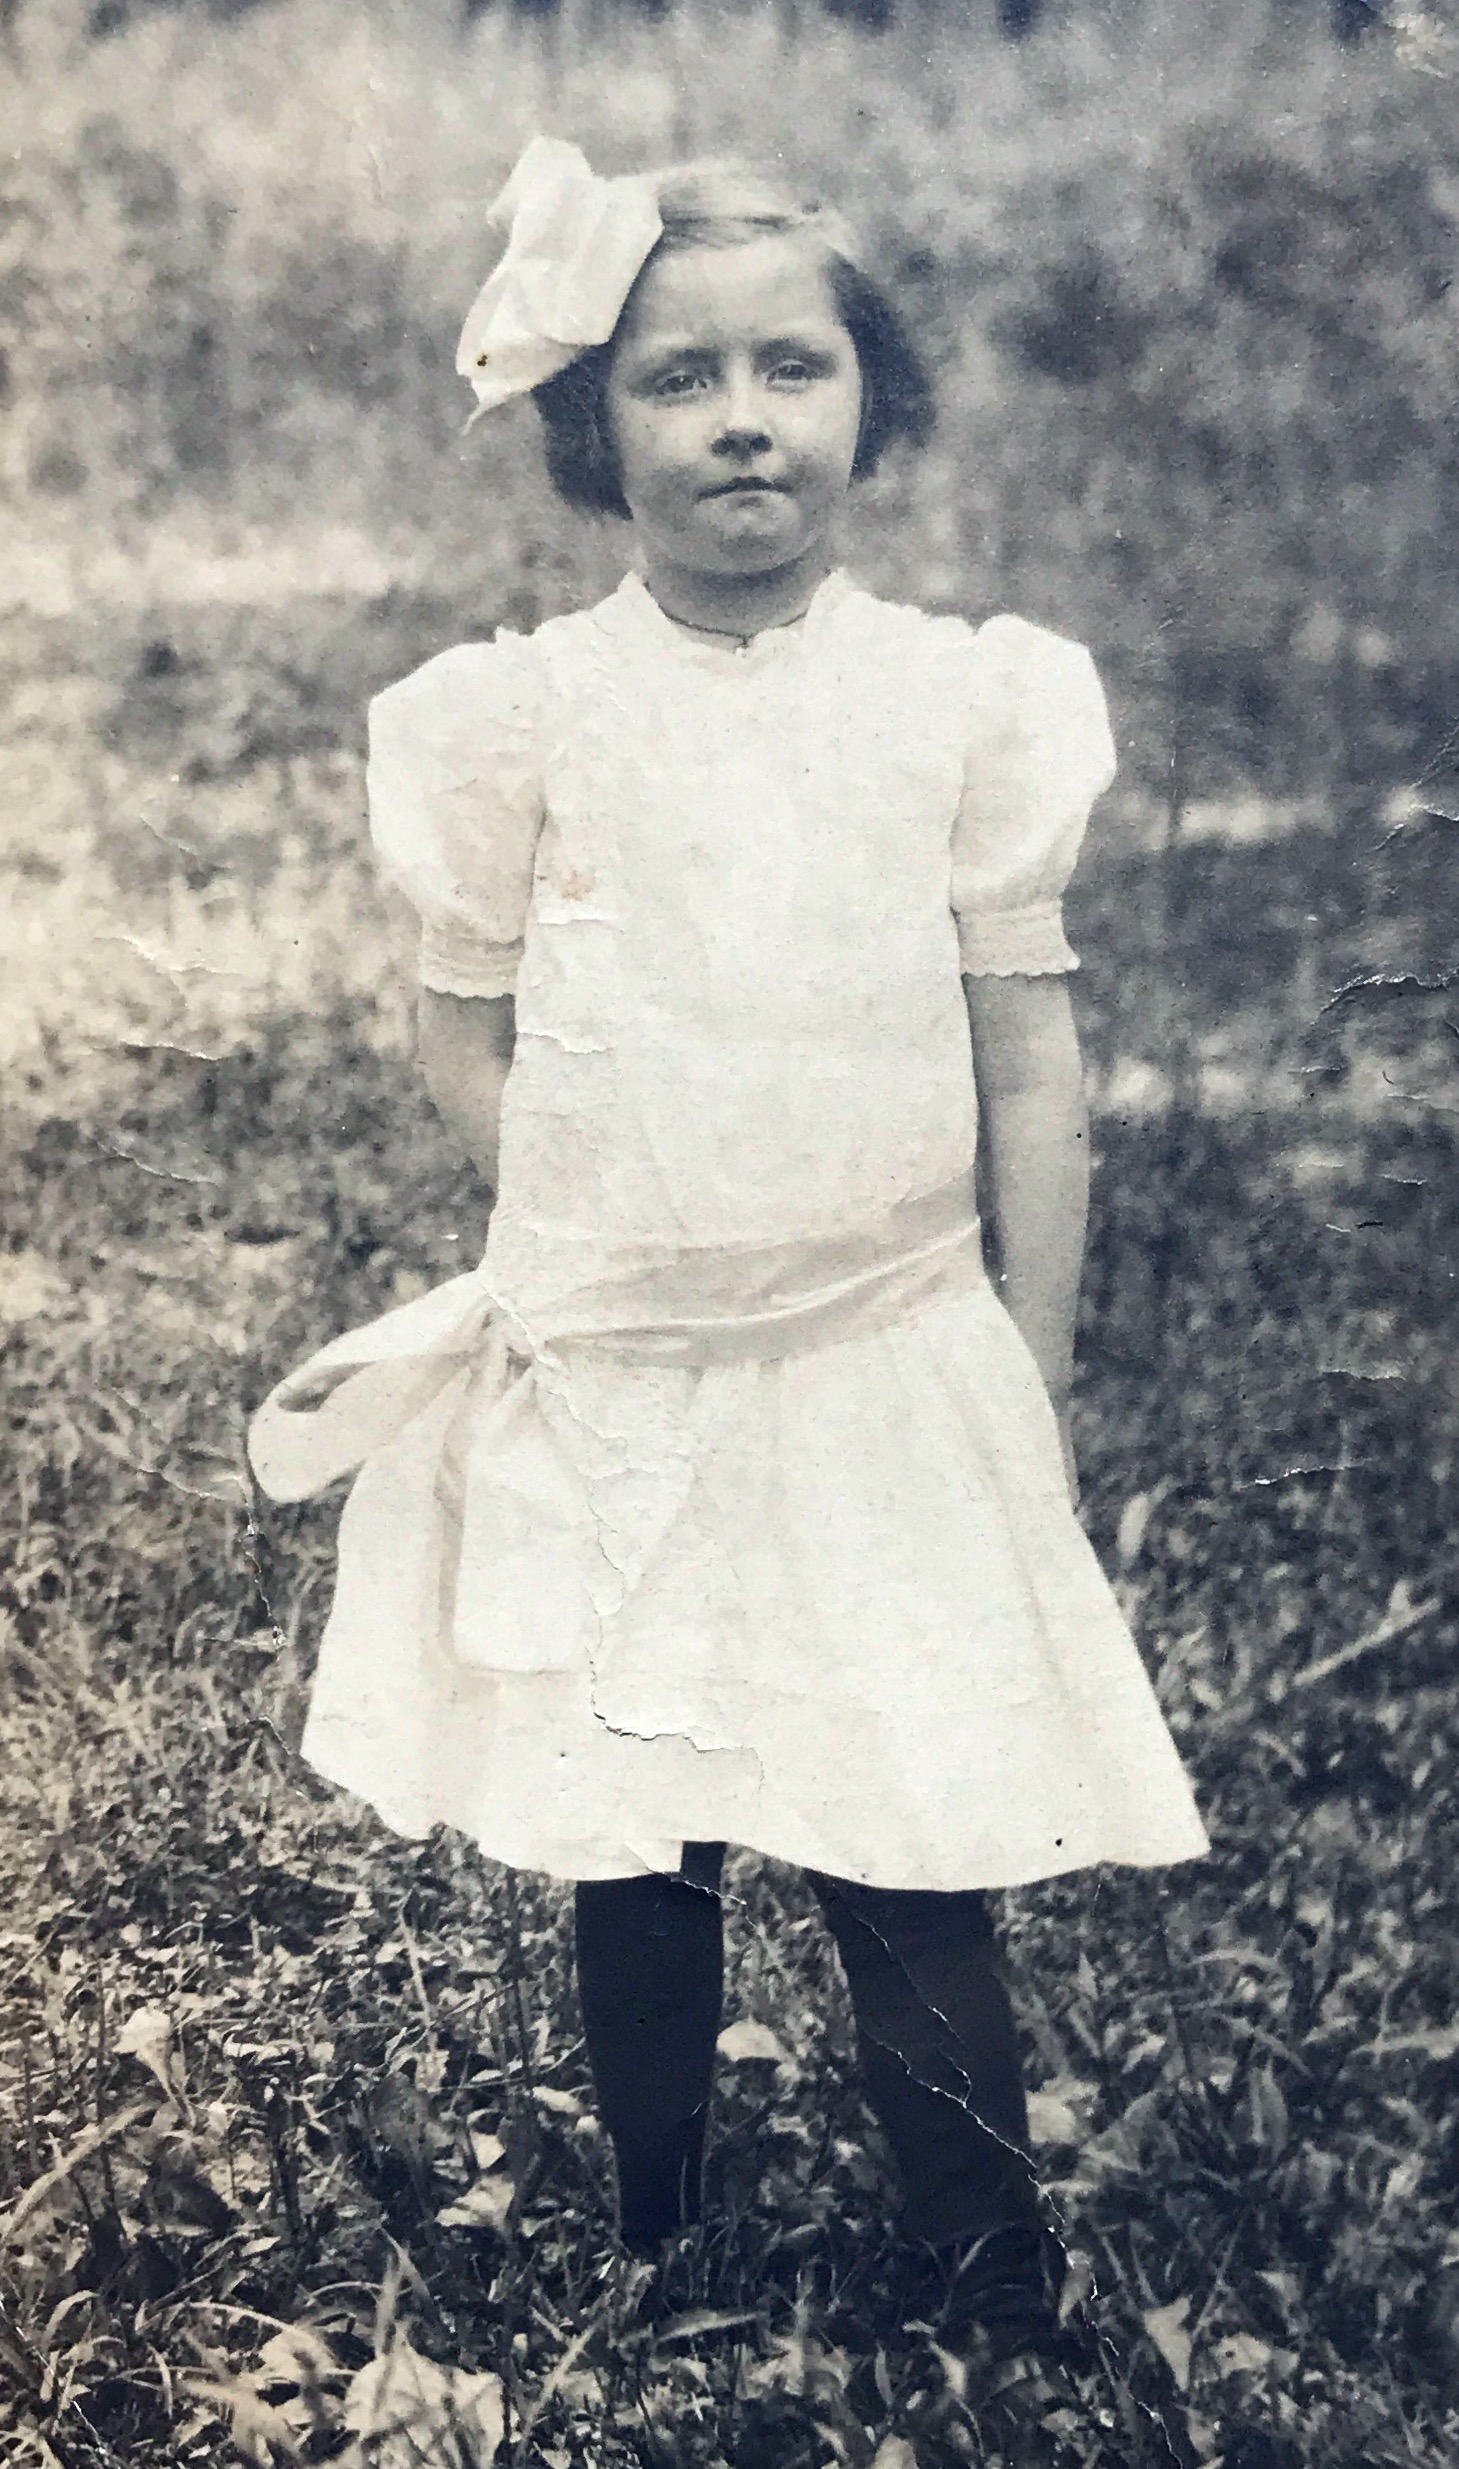 Helen Margaret McDowell, 1 Feb 1903 - 6 Jun 1922
Age 11